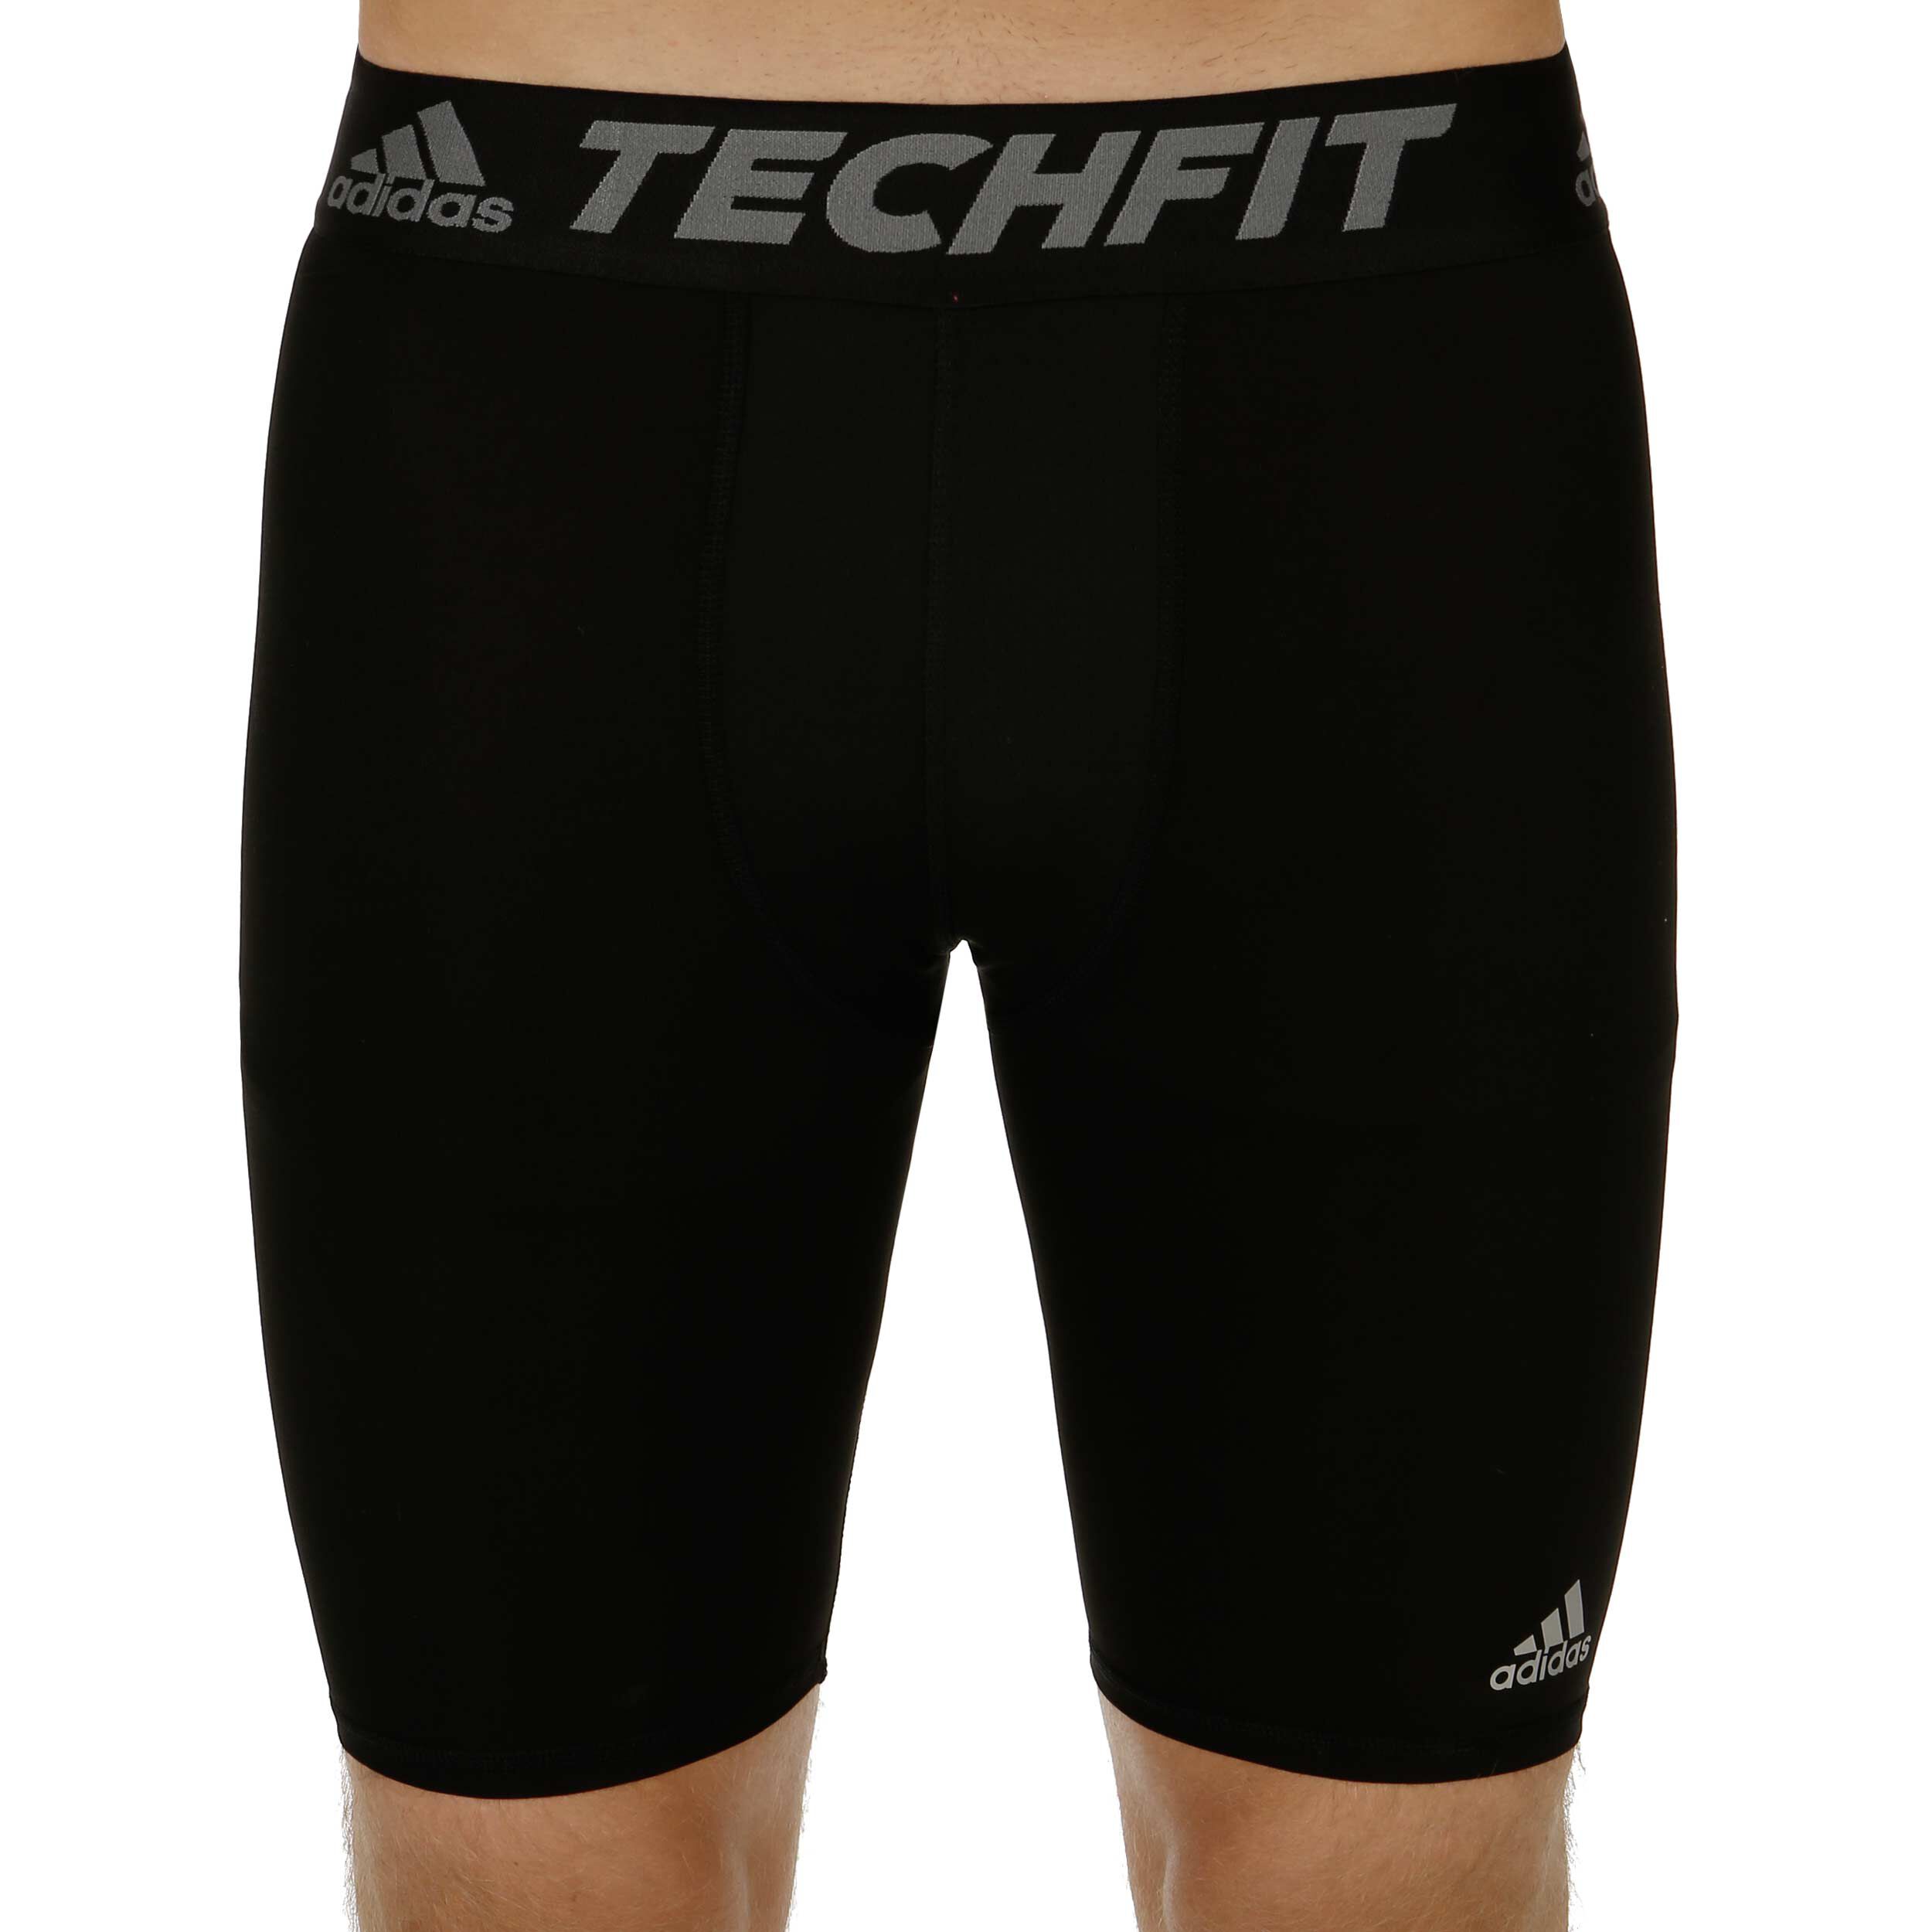 adidas techfit base shorts